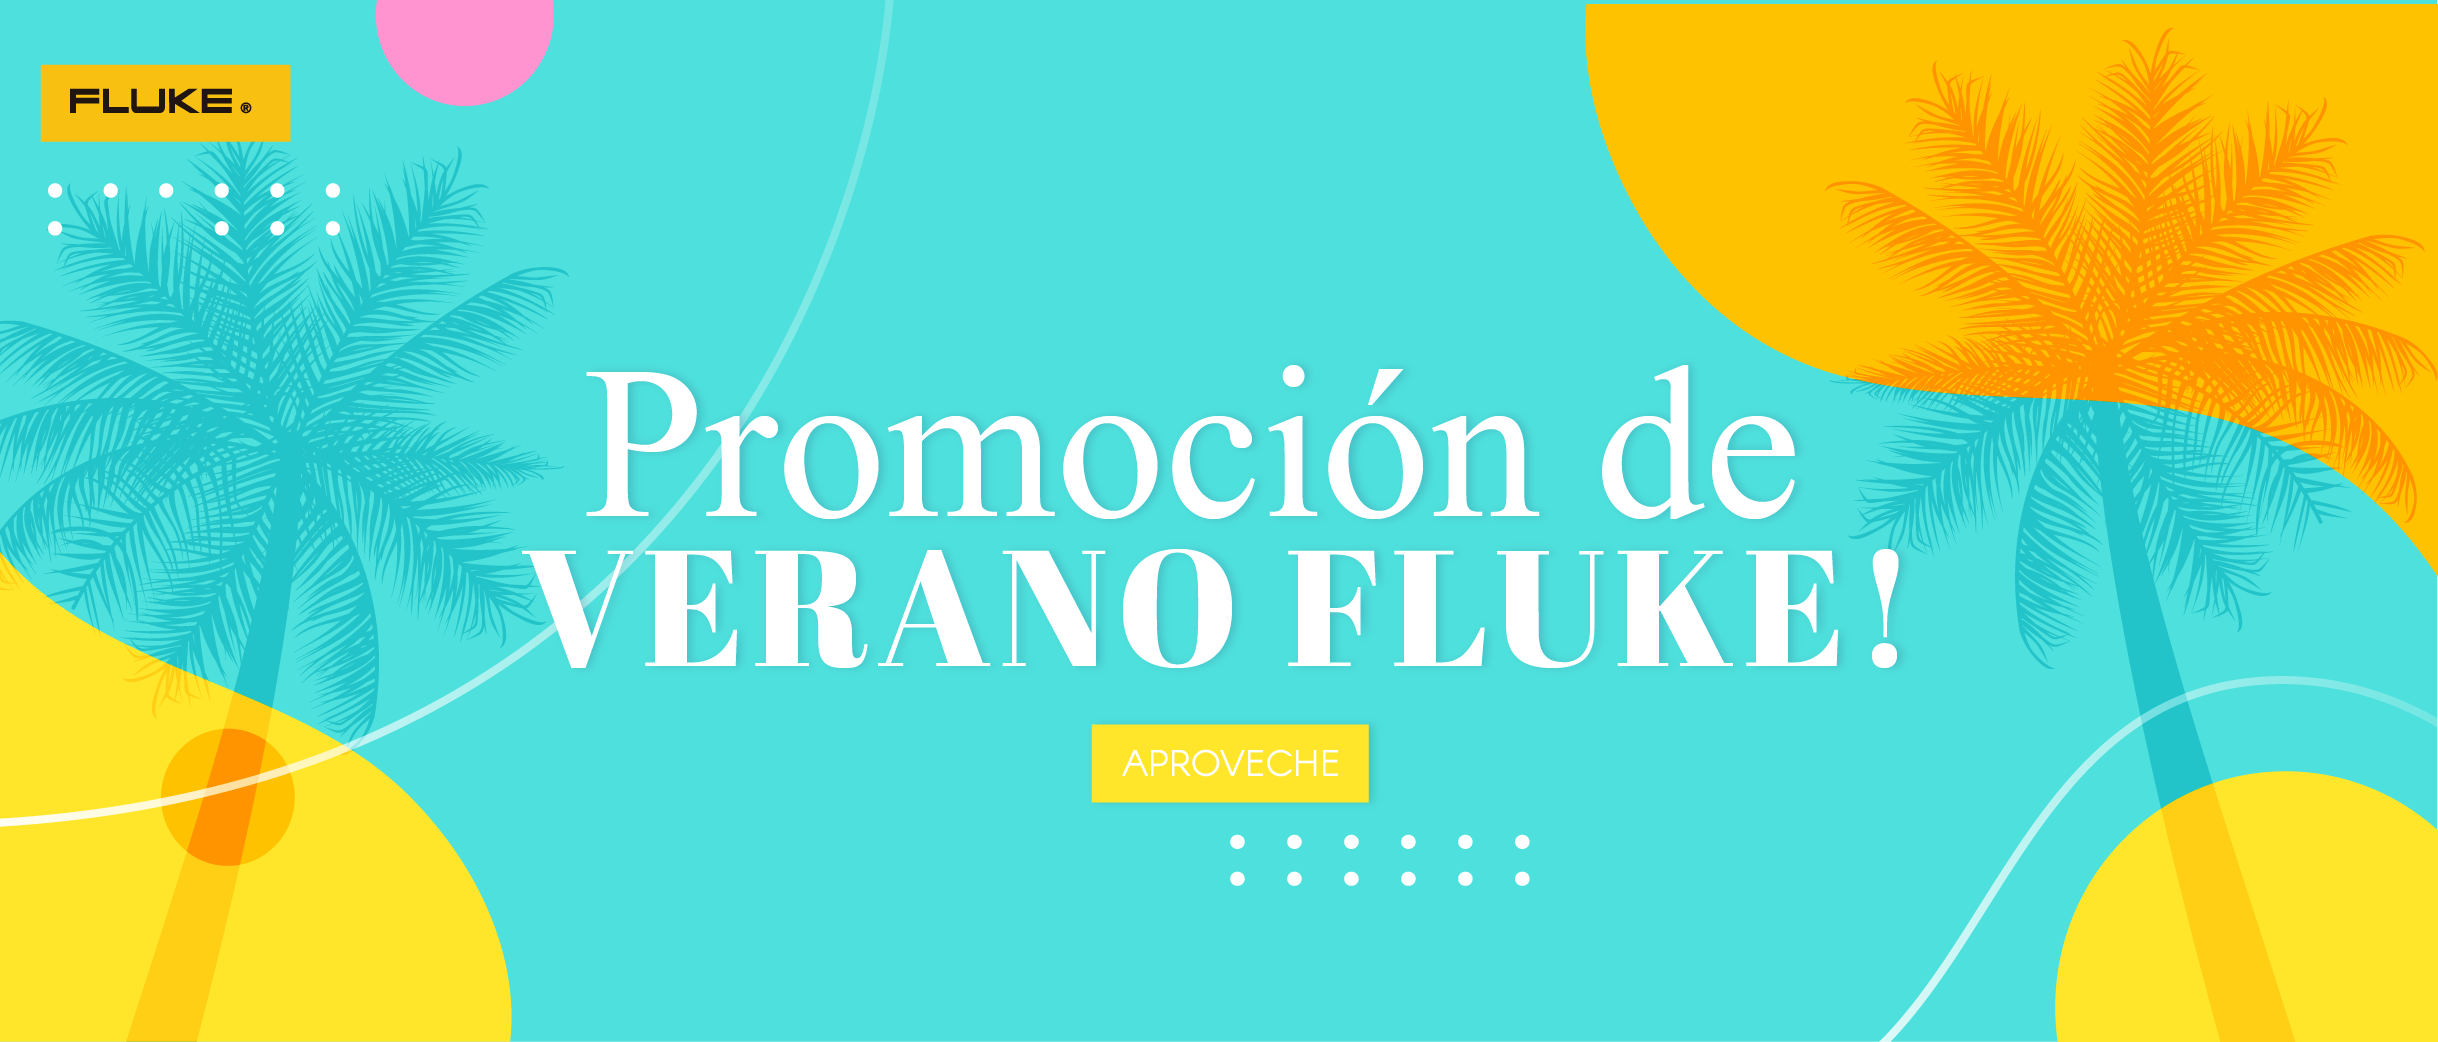 Banner promo de verano fluke-01